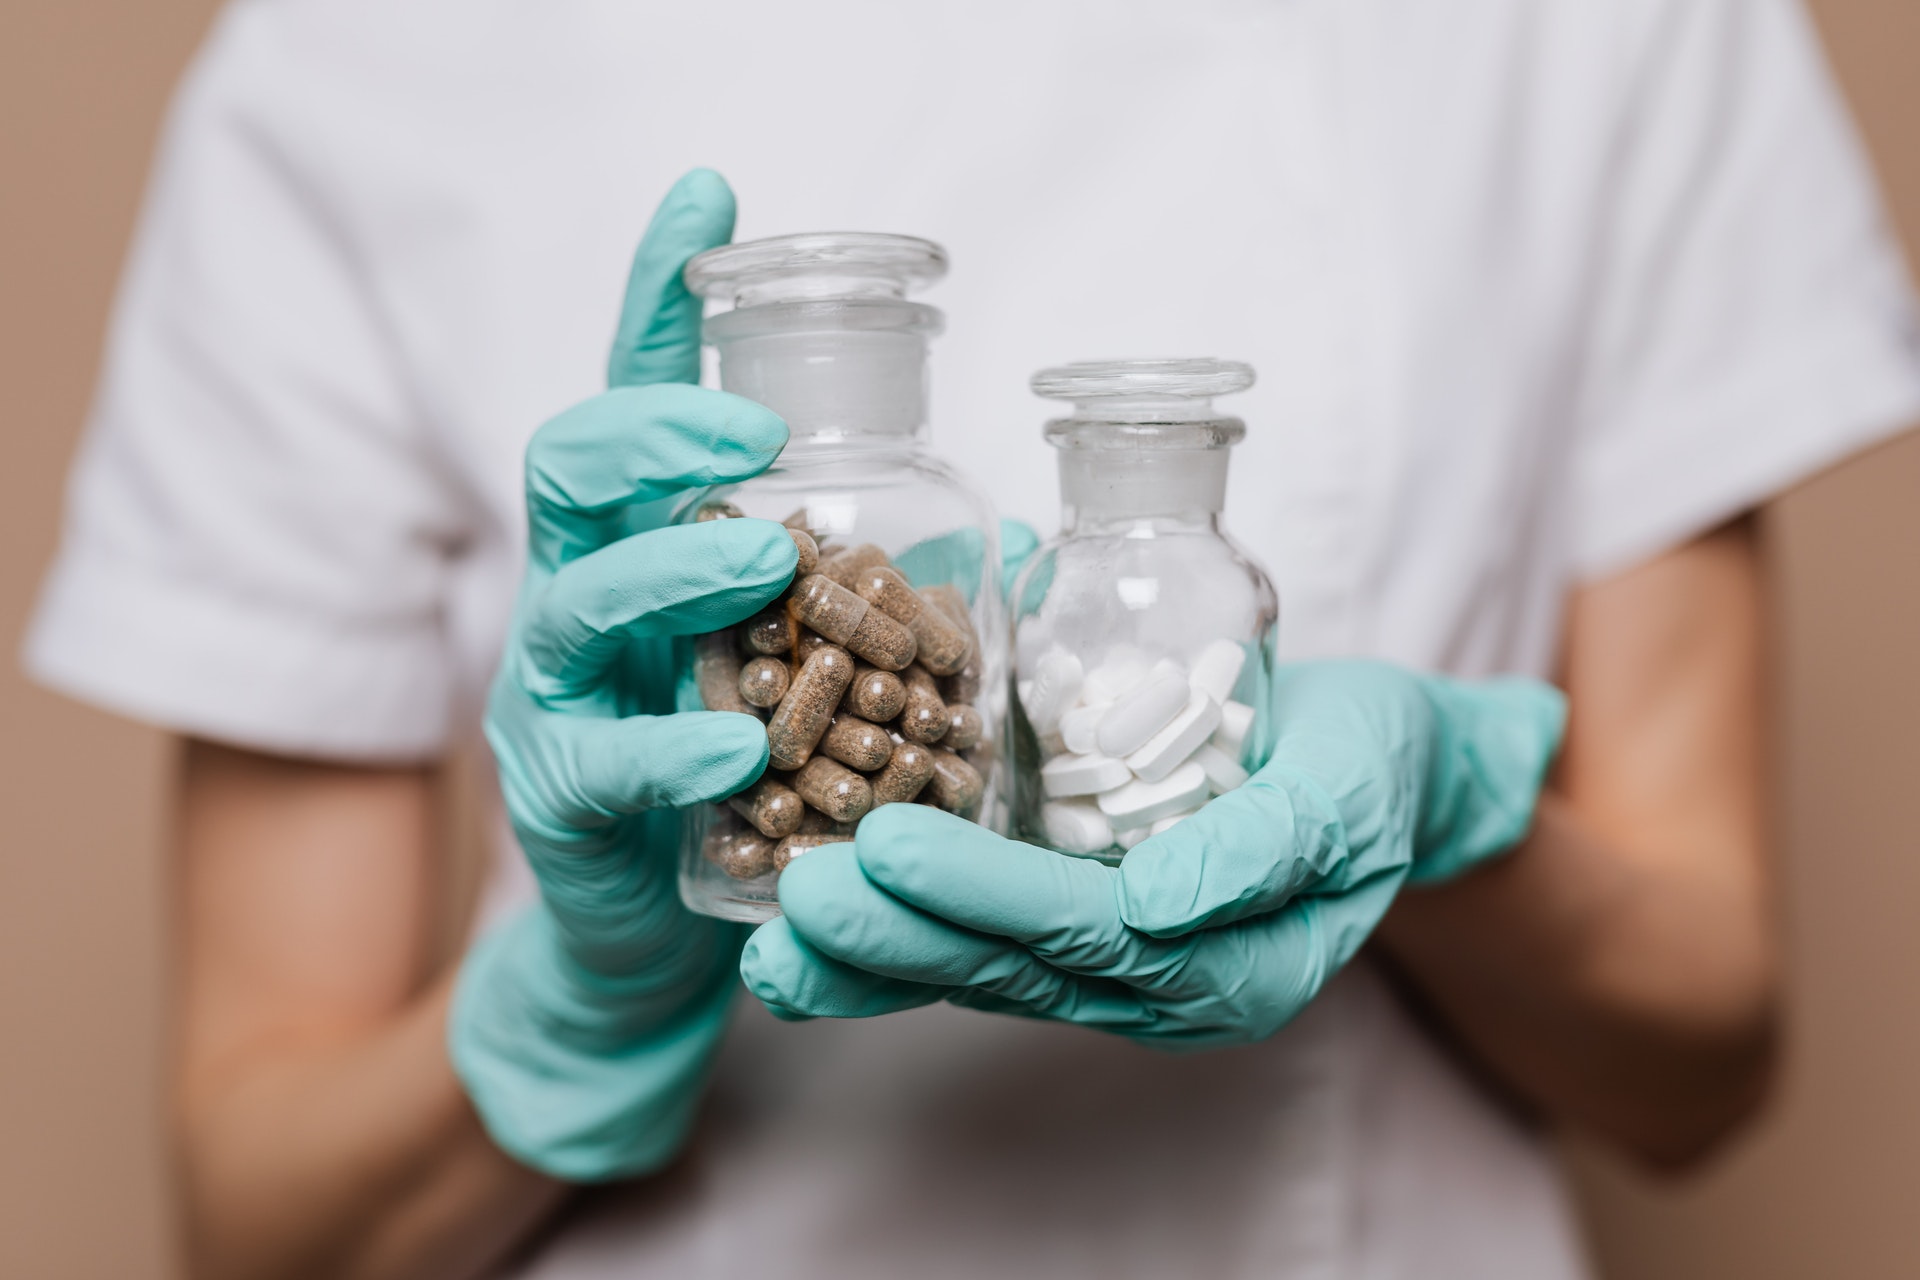 pharmacy technician holding jars of medication